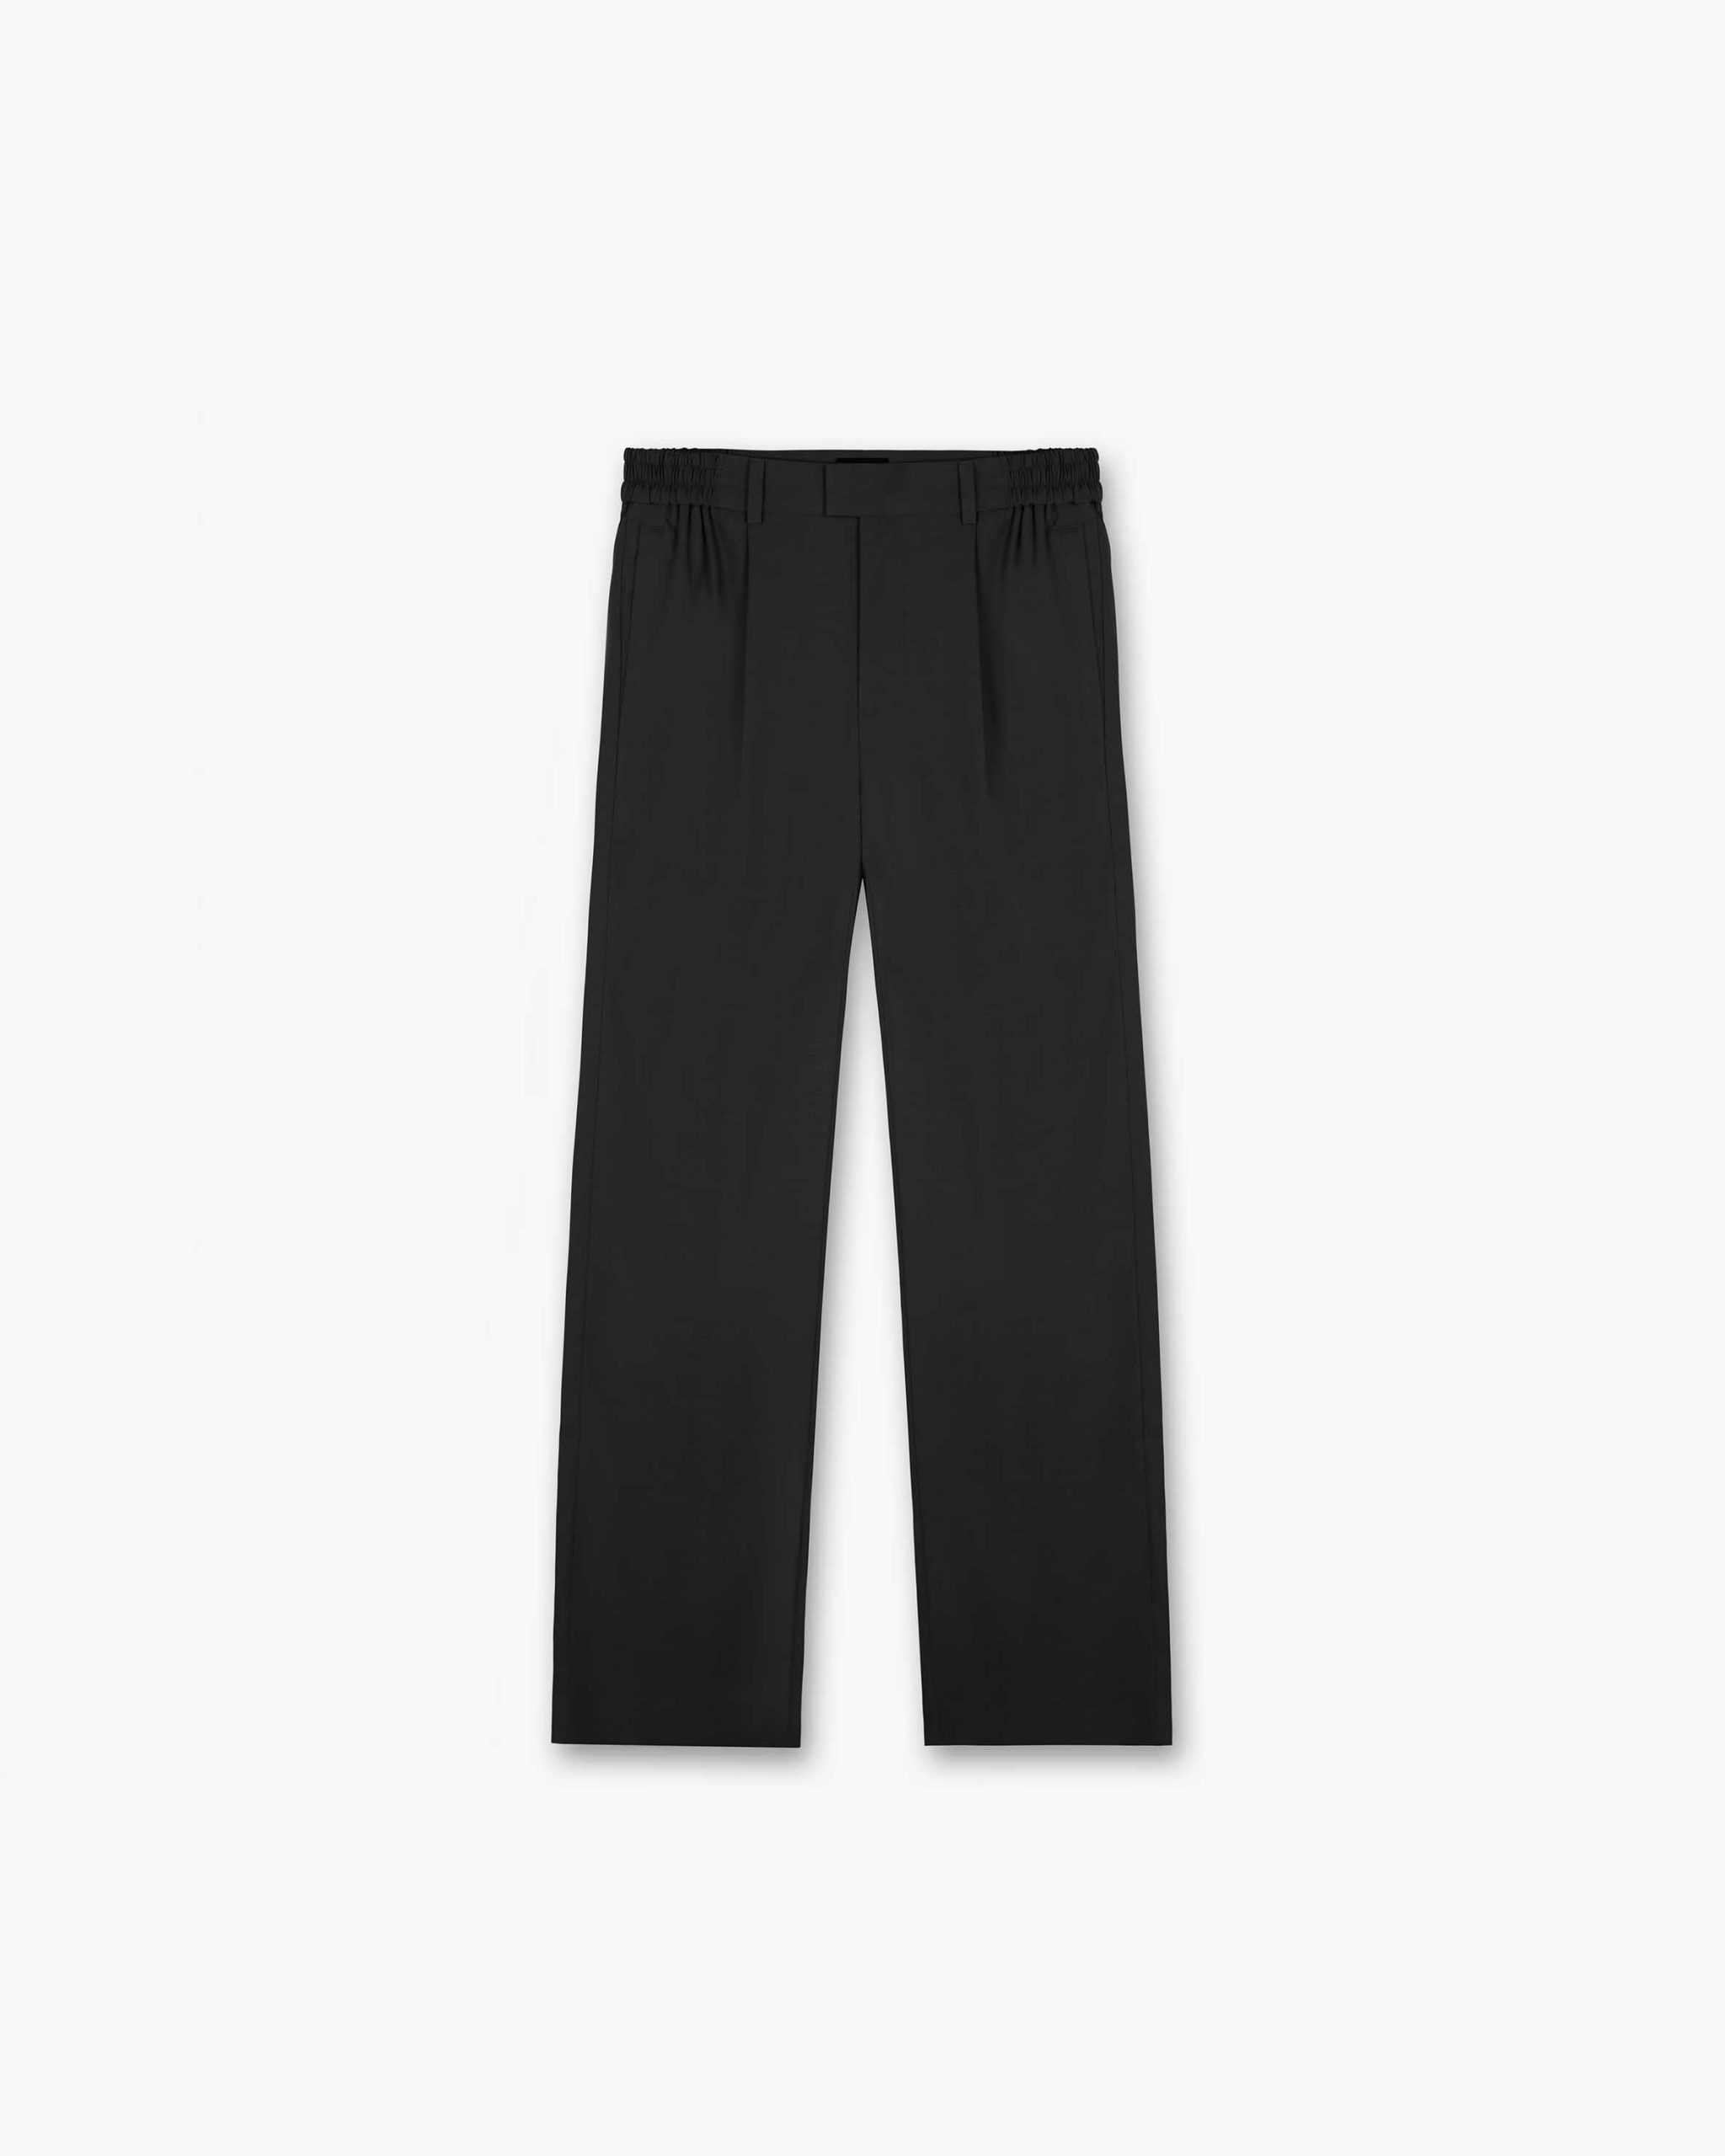 Represent Relaxed Pant - Black - Represemt Clo® Online Shop